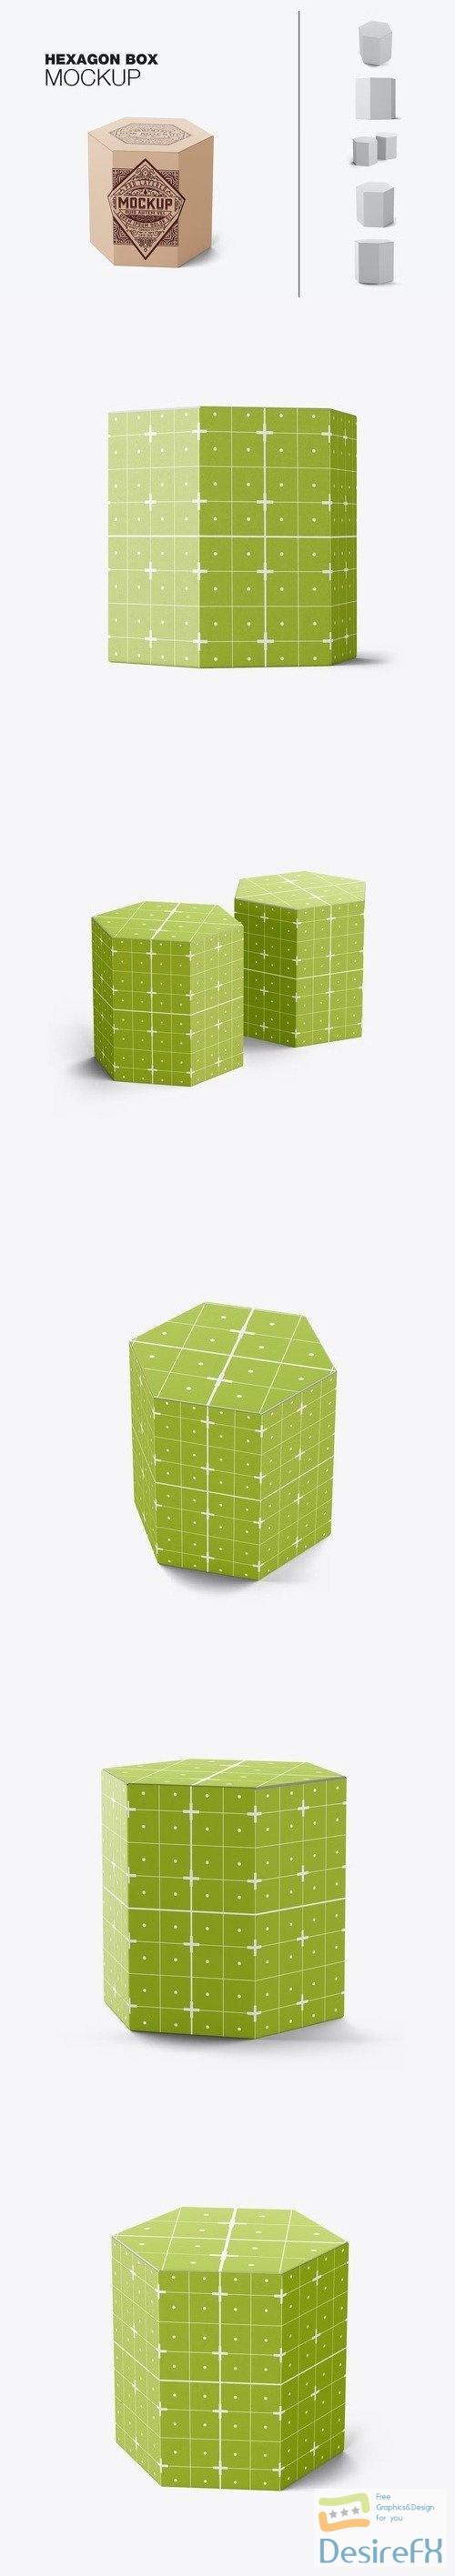 Hexagonal Box Mockup